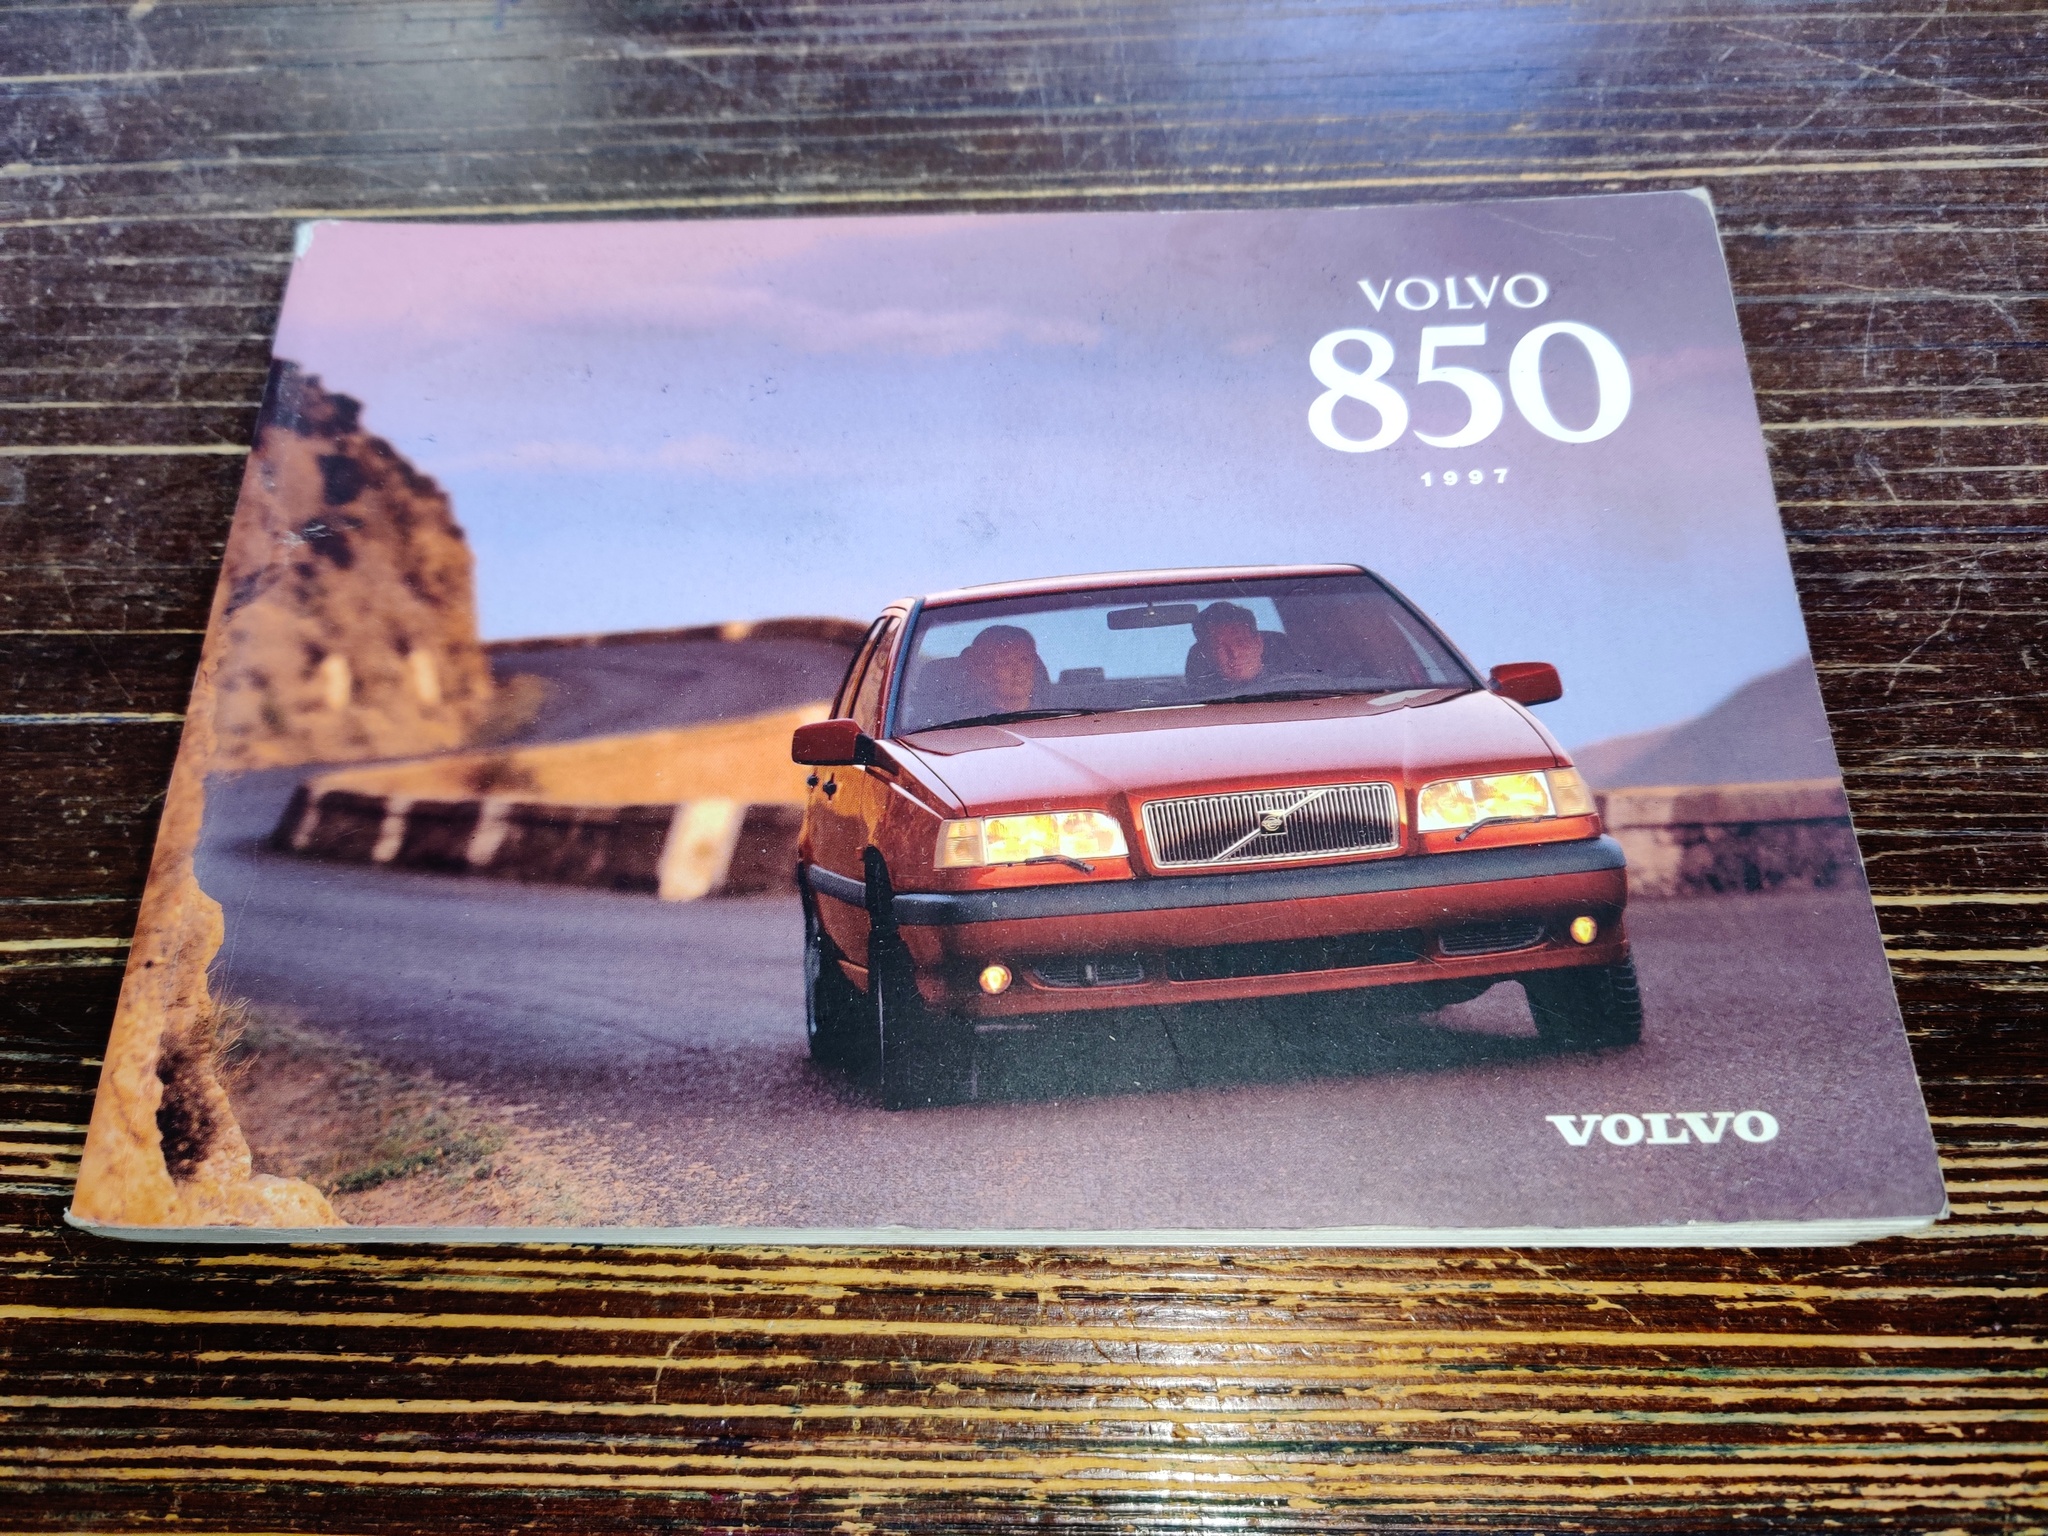 Instruktionsbok - Volvo 850 Tryckt 1997